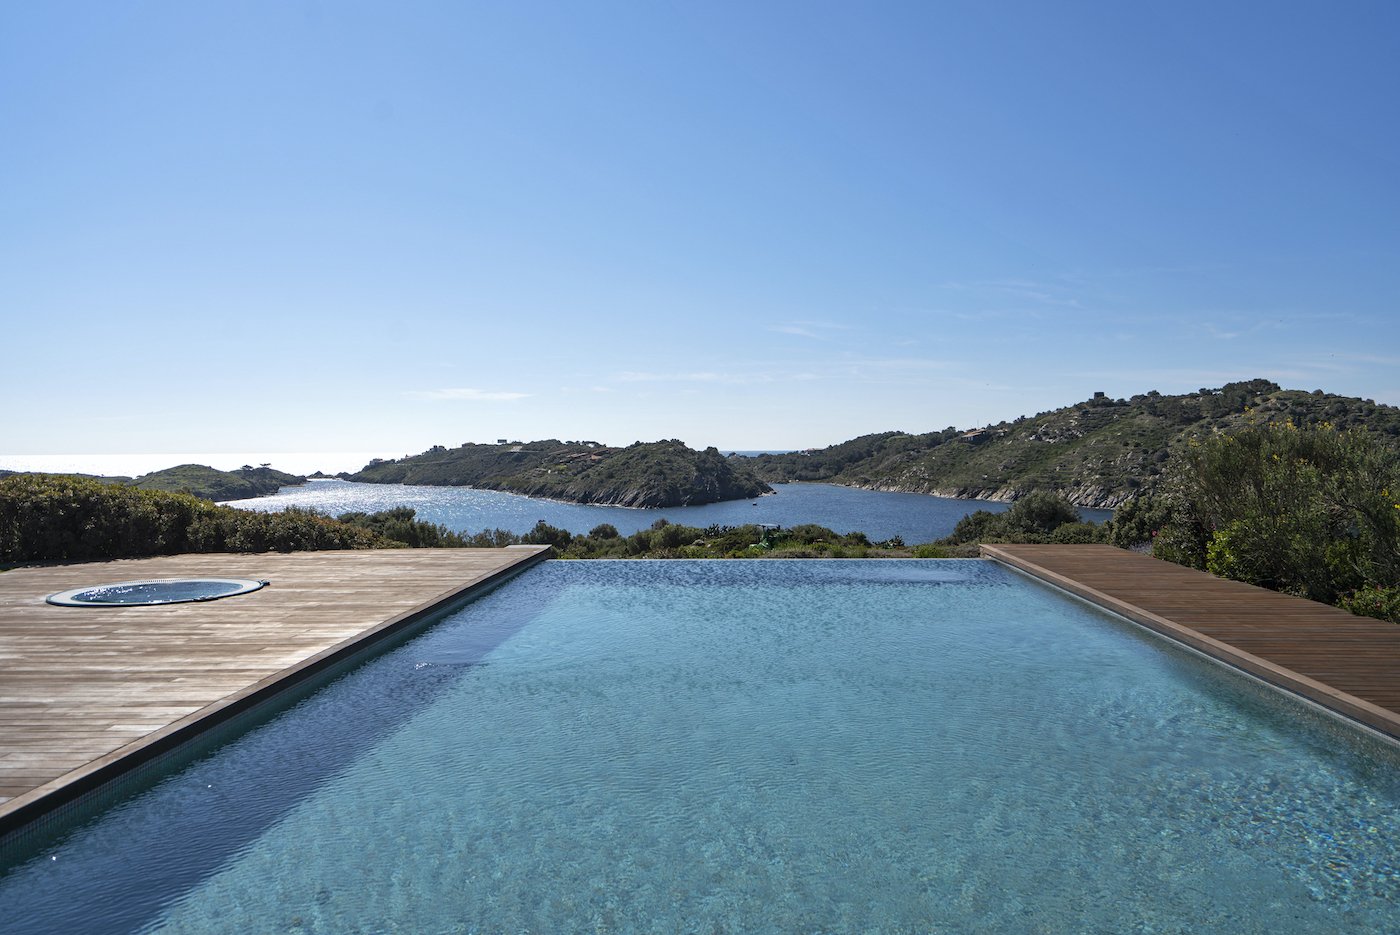 Luxury villa in Cadaqués, Spain, on the Mediterranean coast